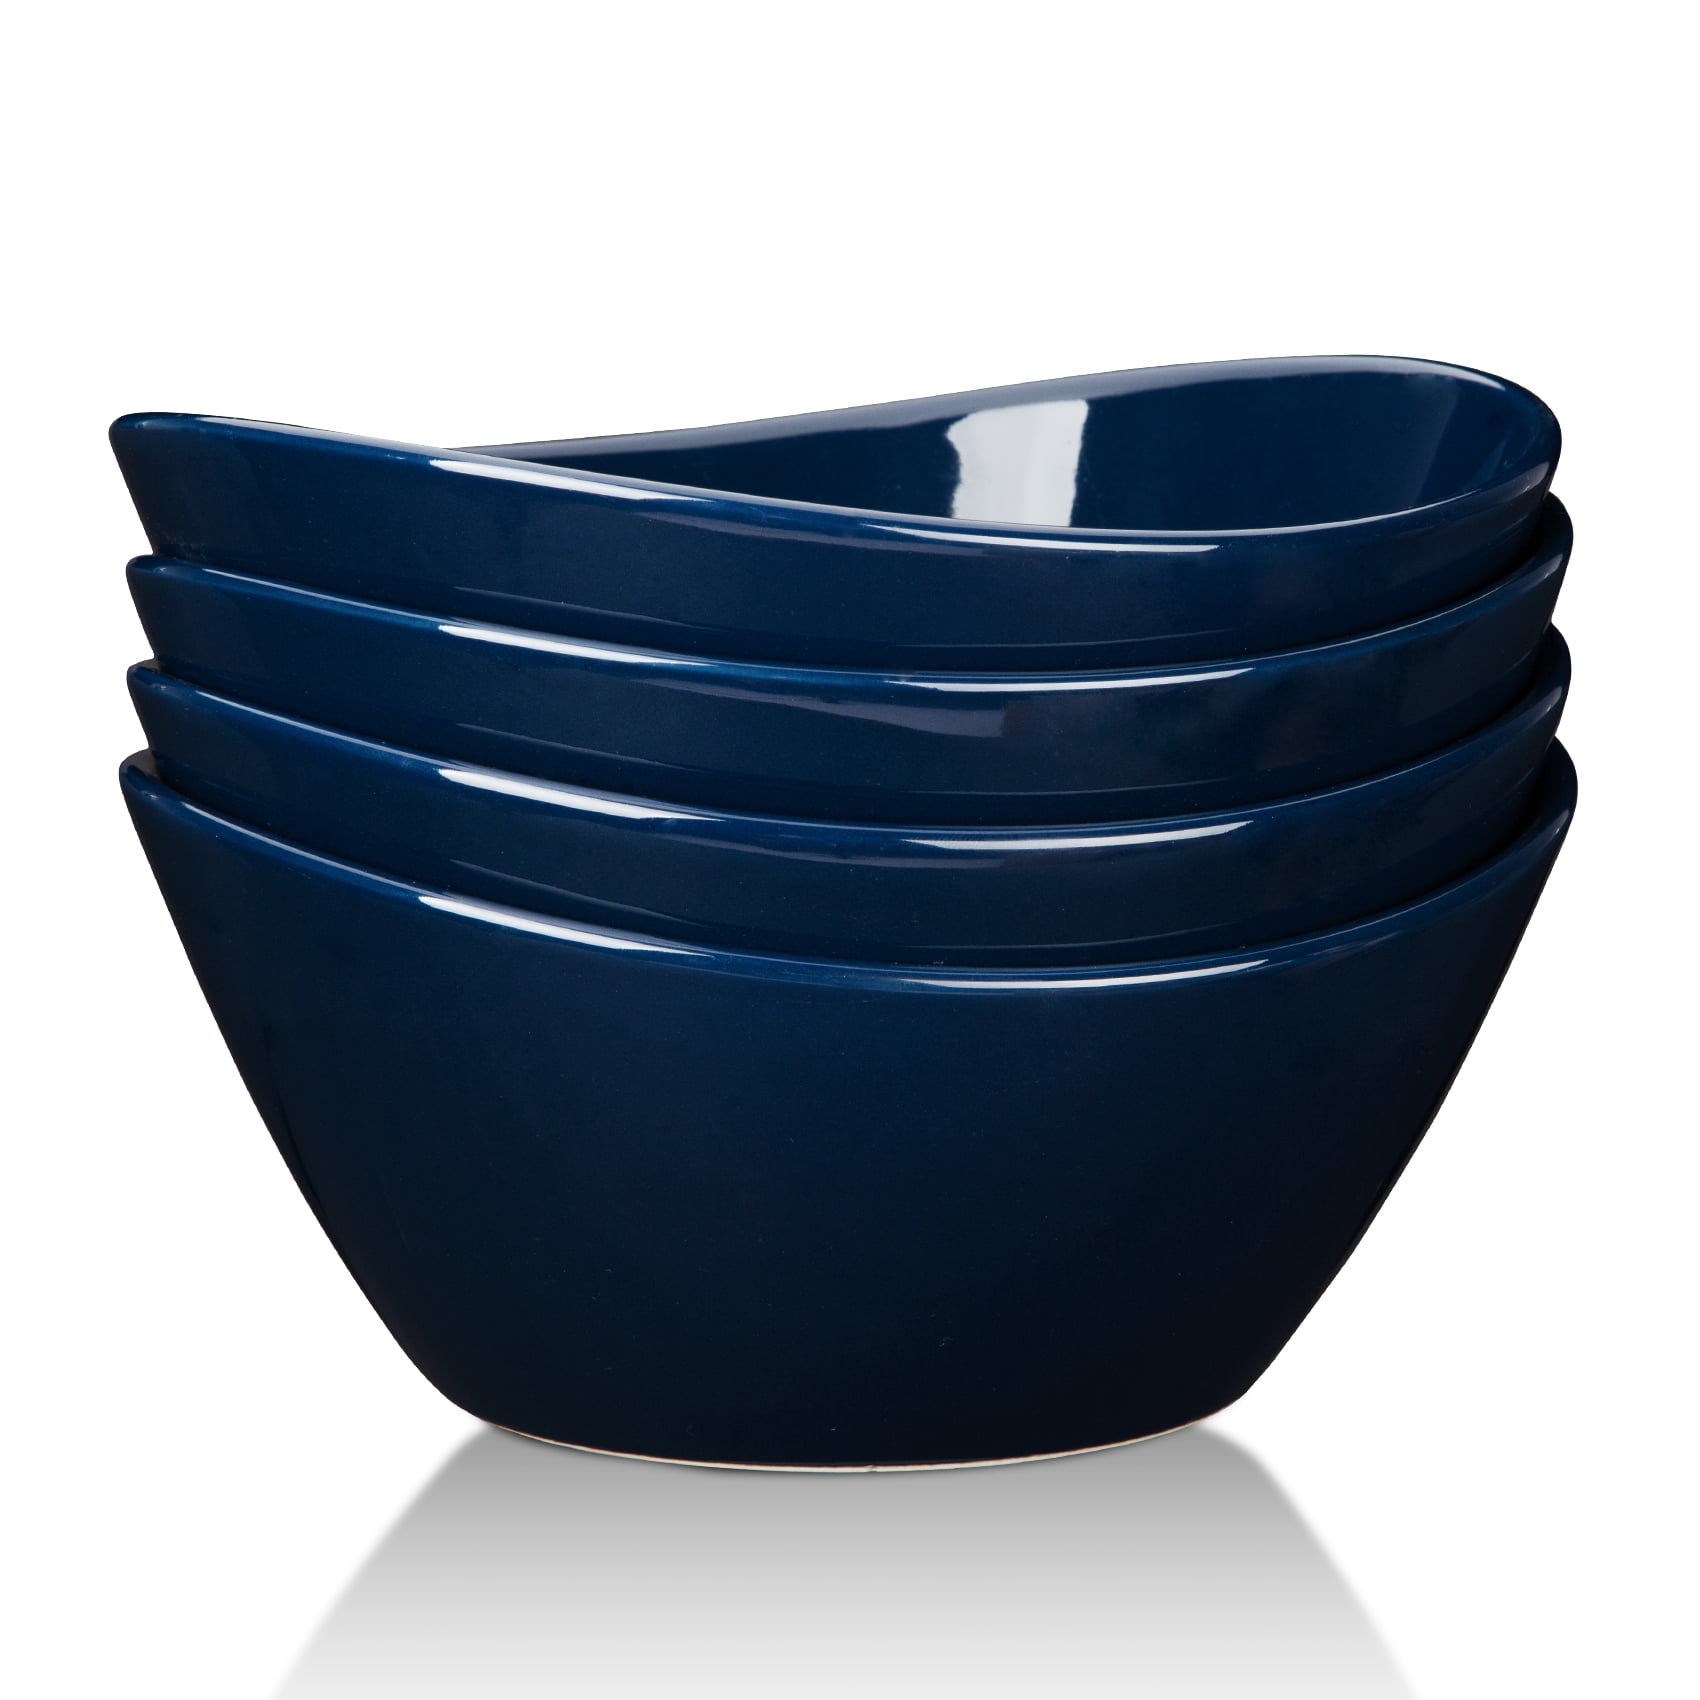 Deep Blue Pasta or Serving Bowl